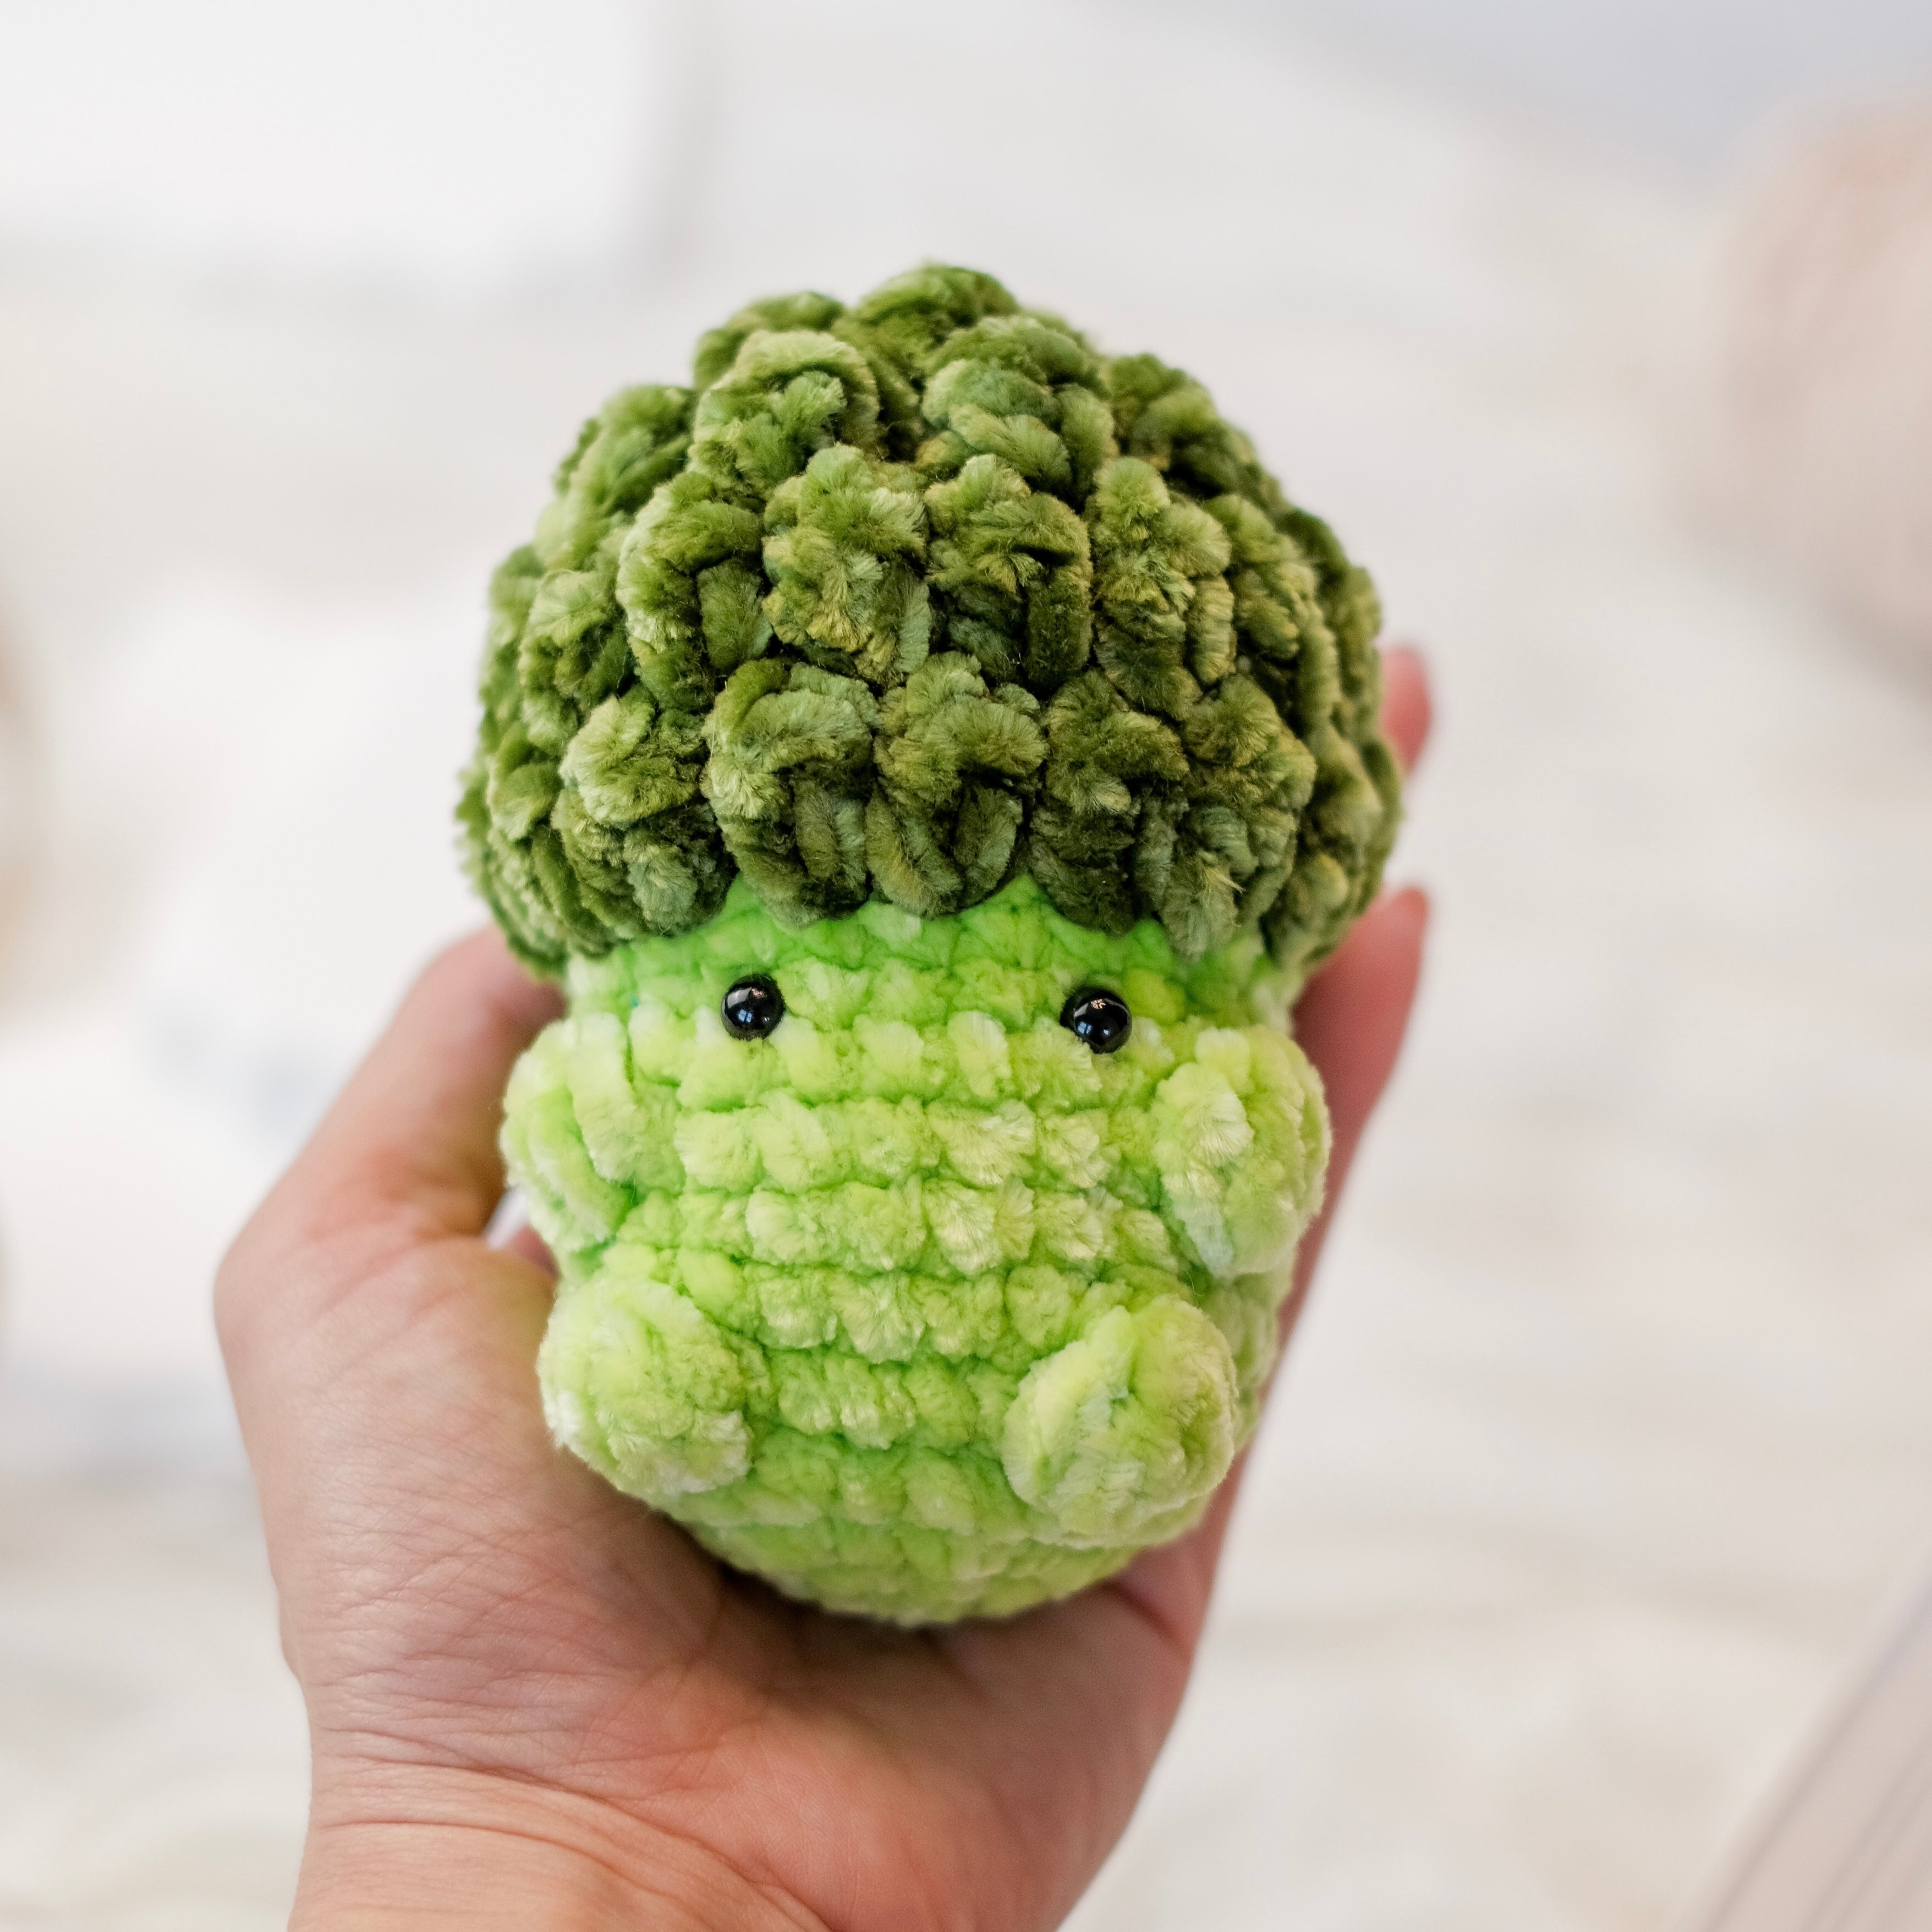 Avocado and Broccoli